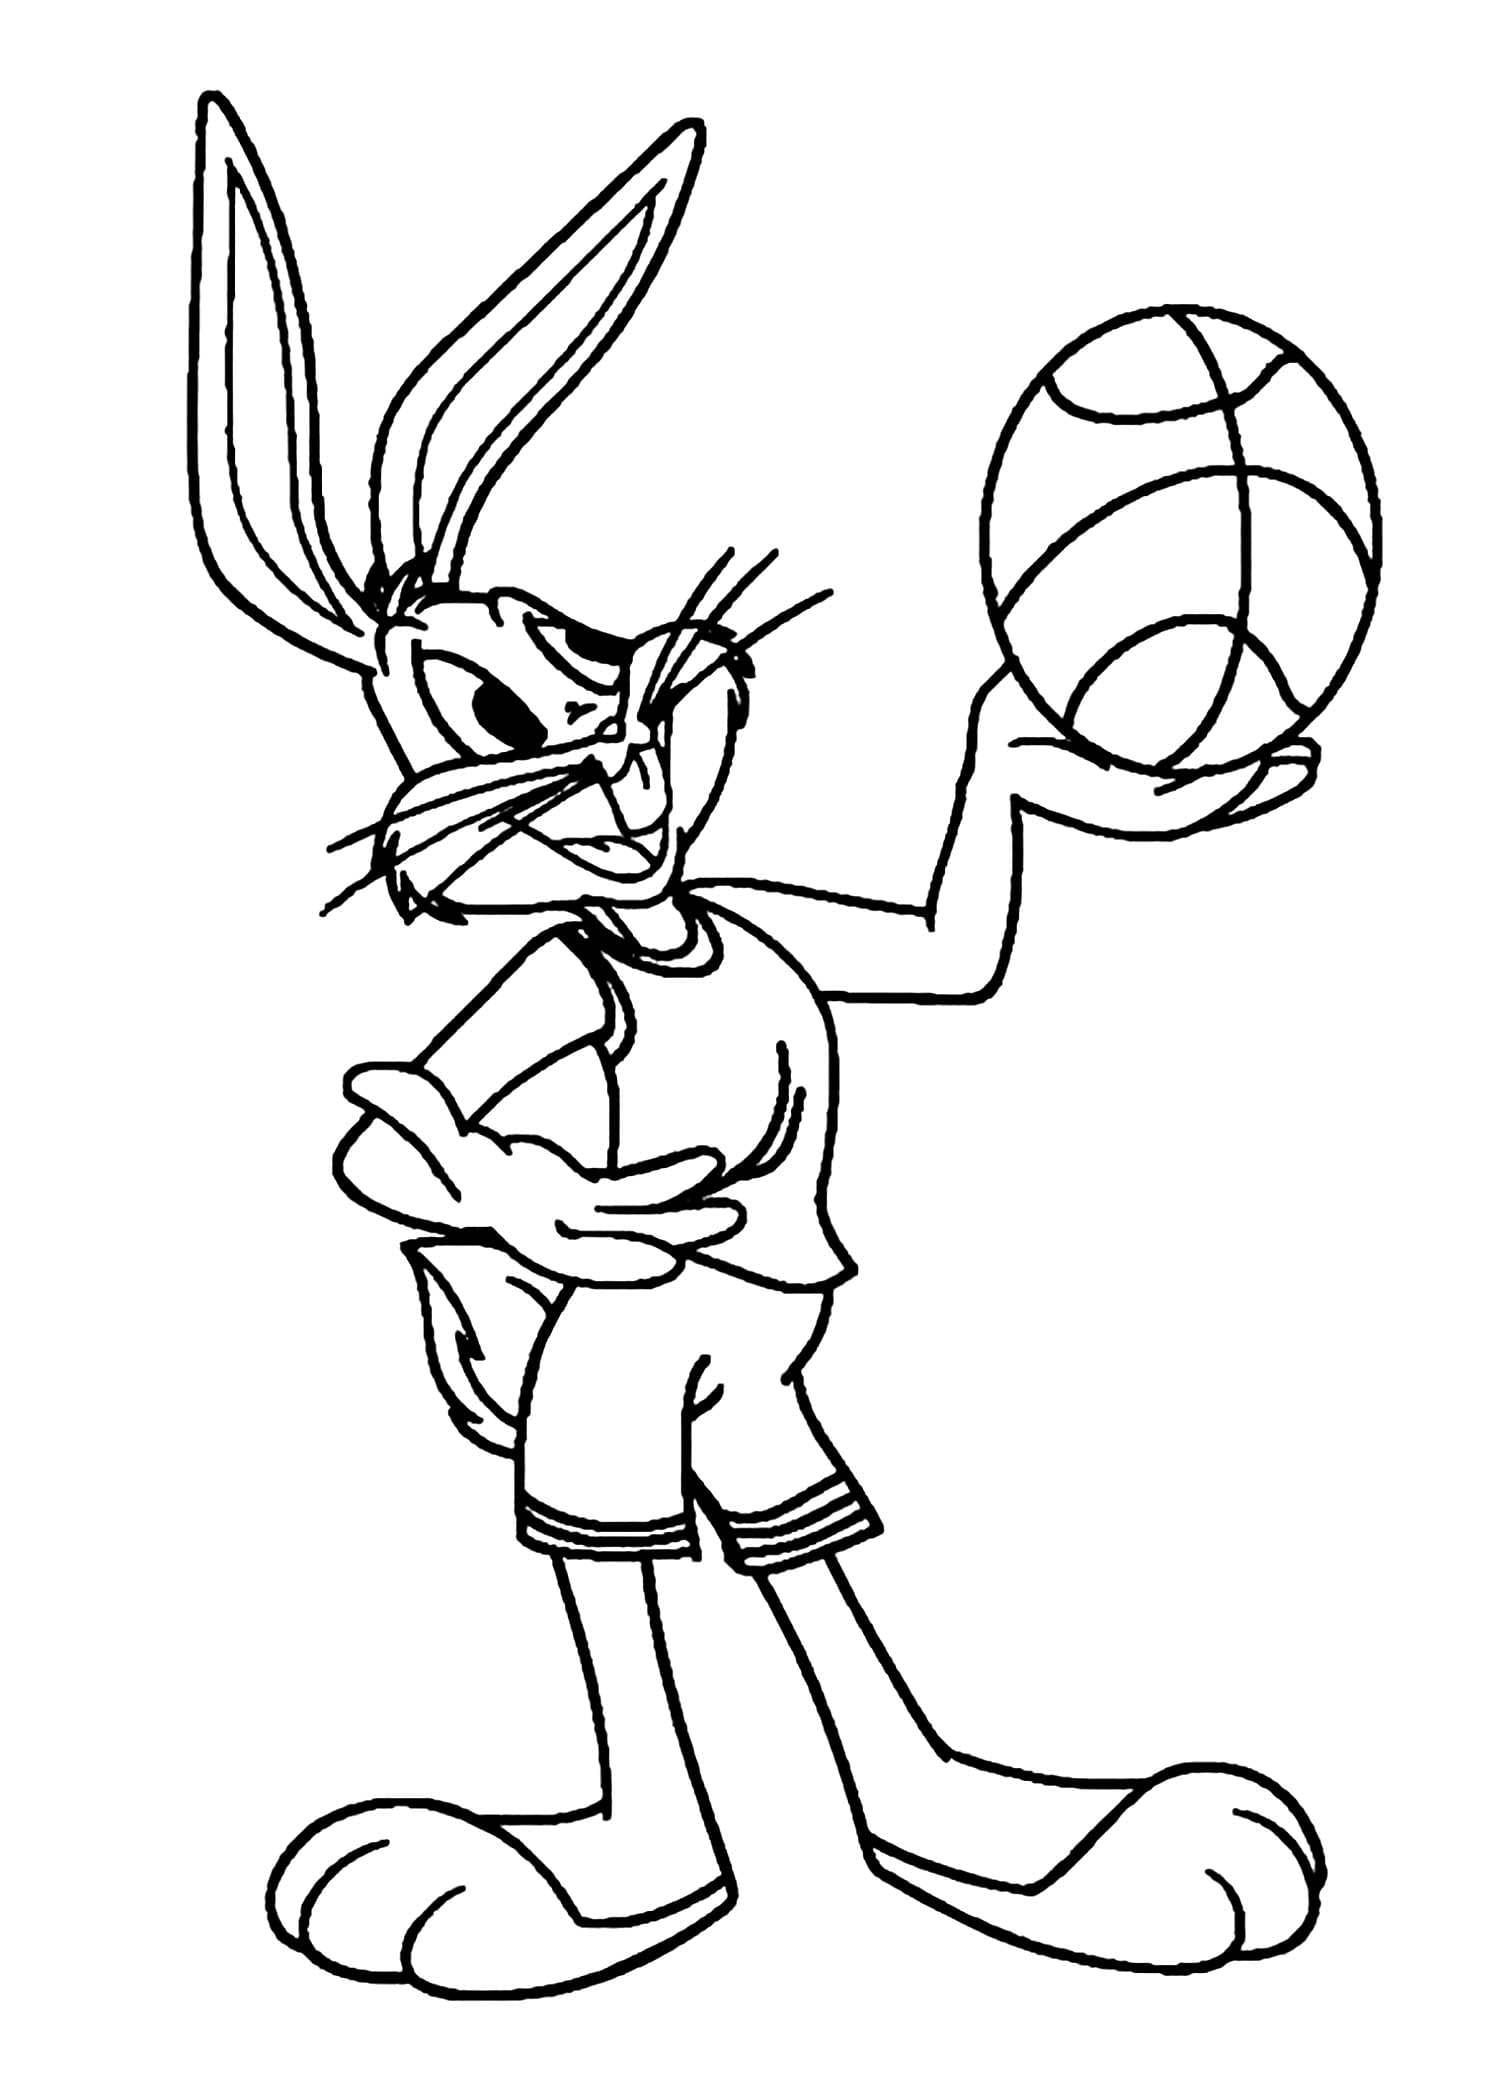 Rabbit Playing Basketball